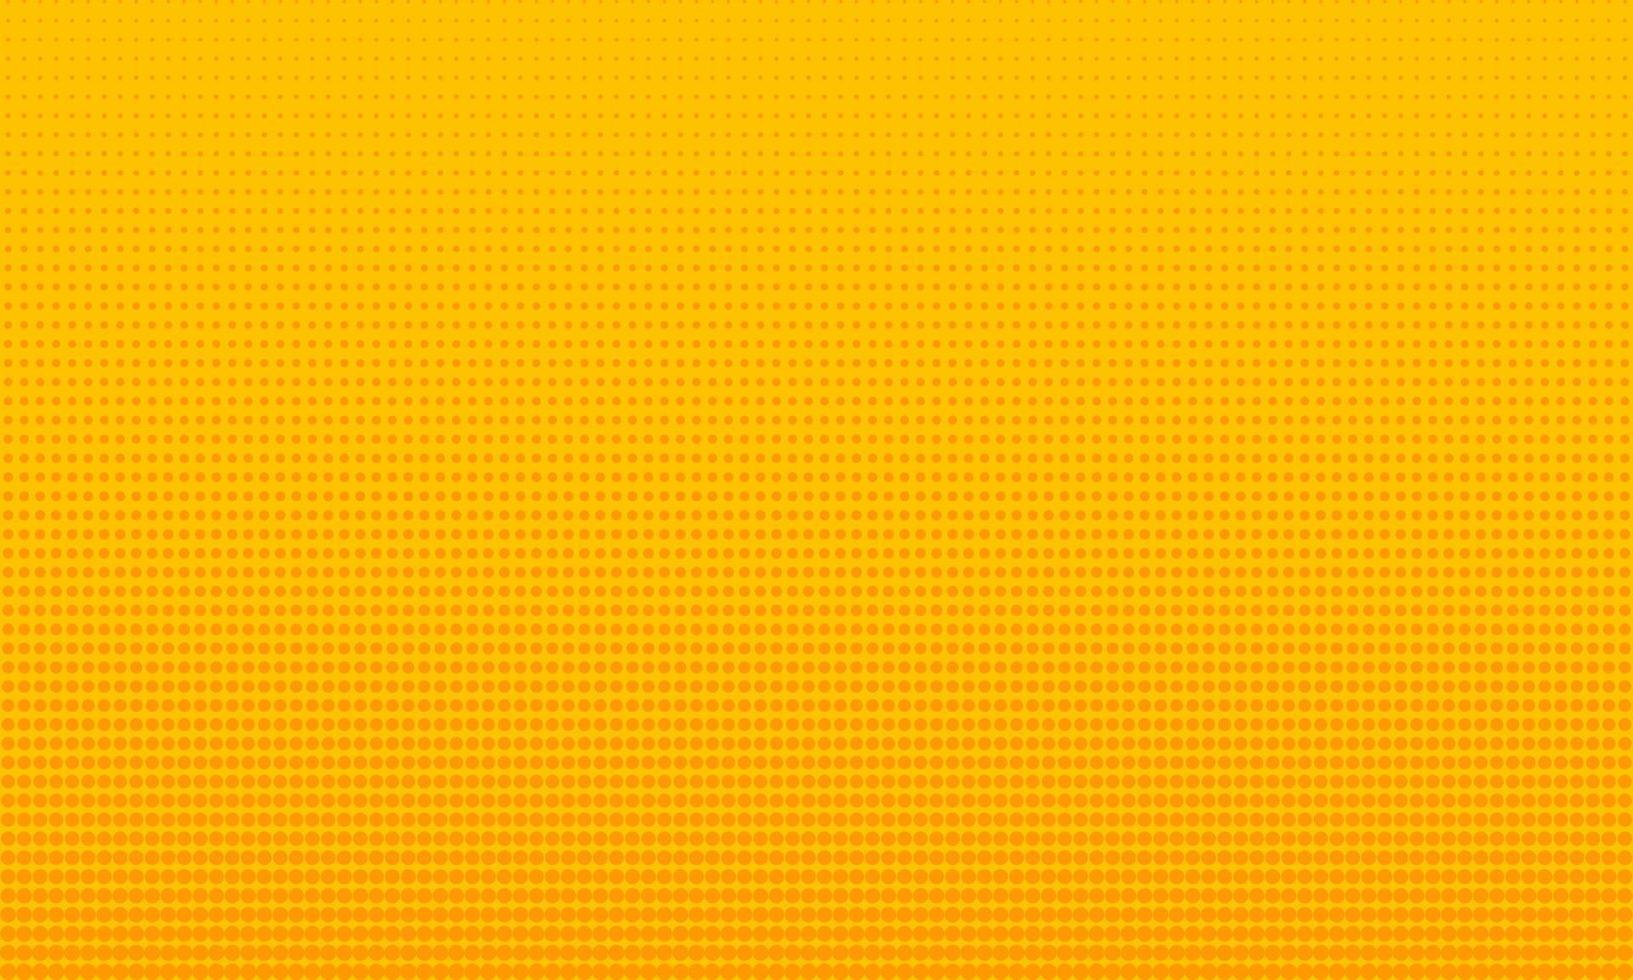 Yellow halftone texture vector background